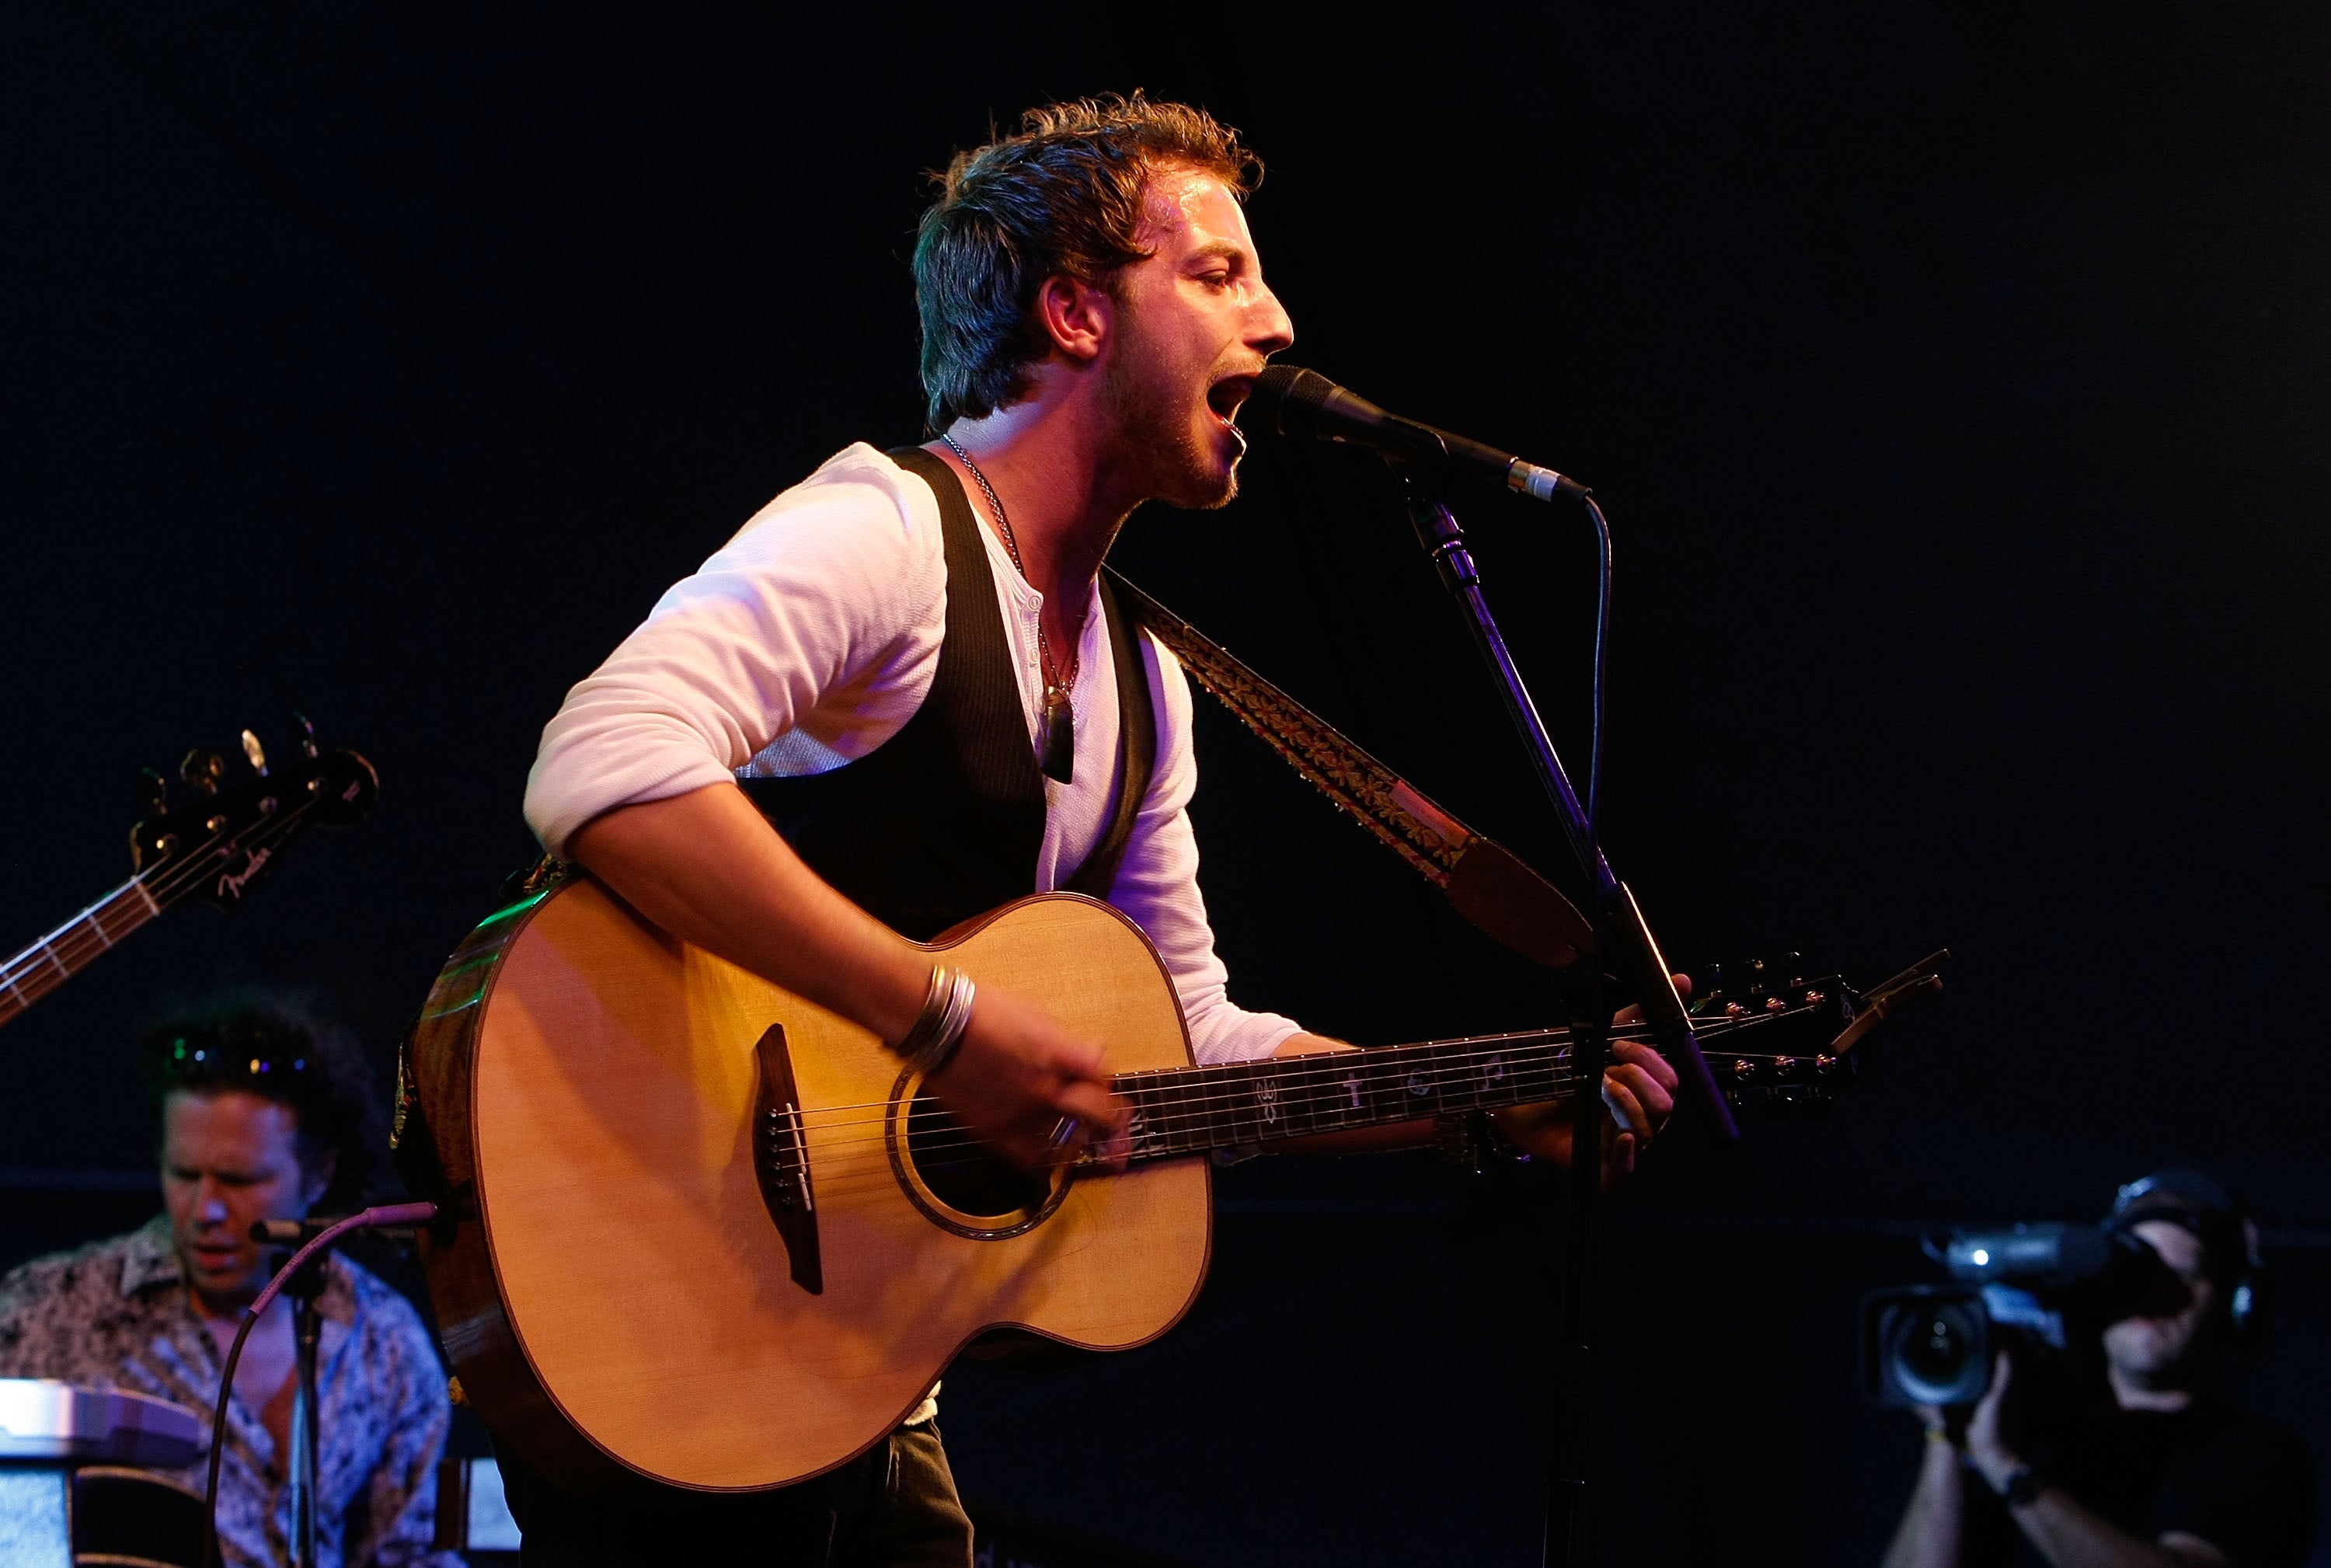 The ‘Broken Strings’ singer shot to fame in 2006